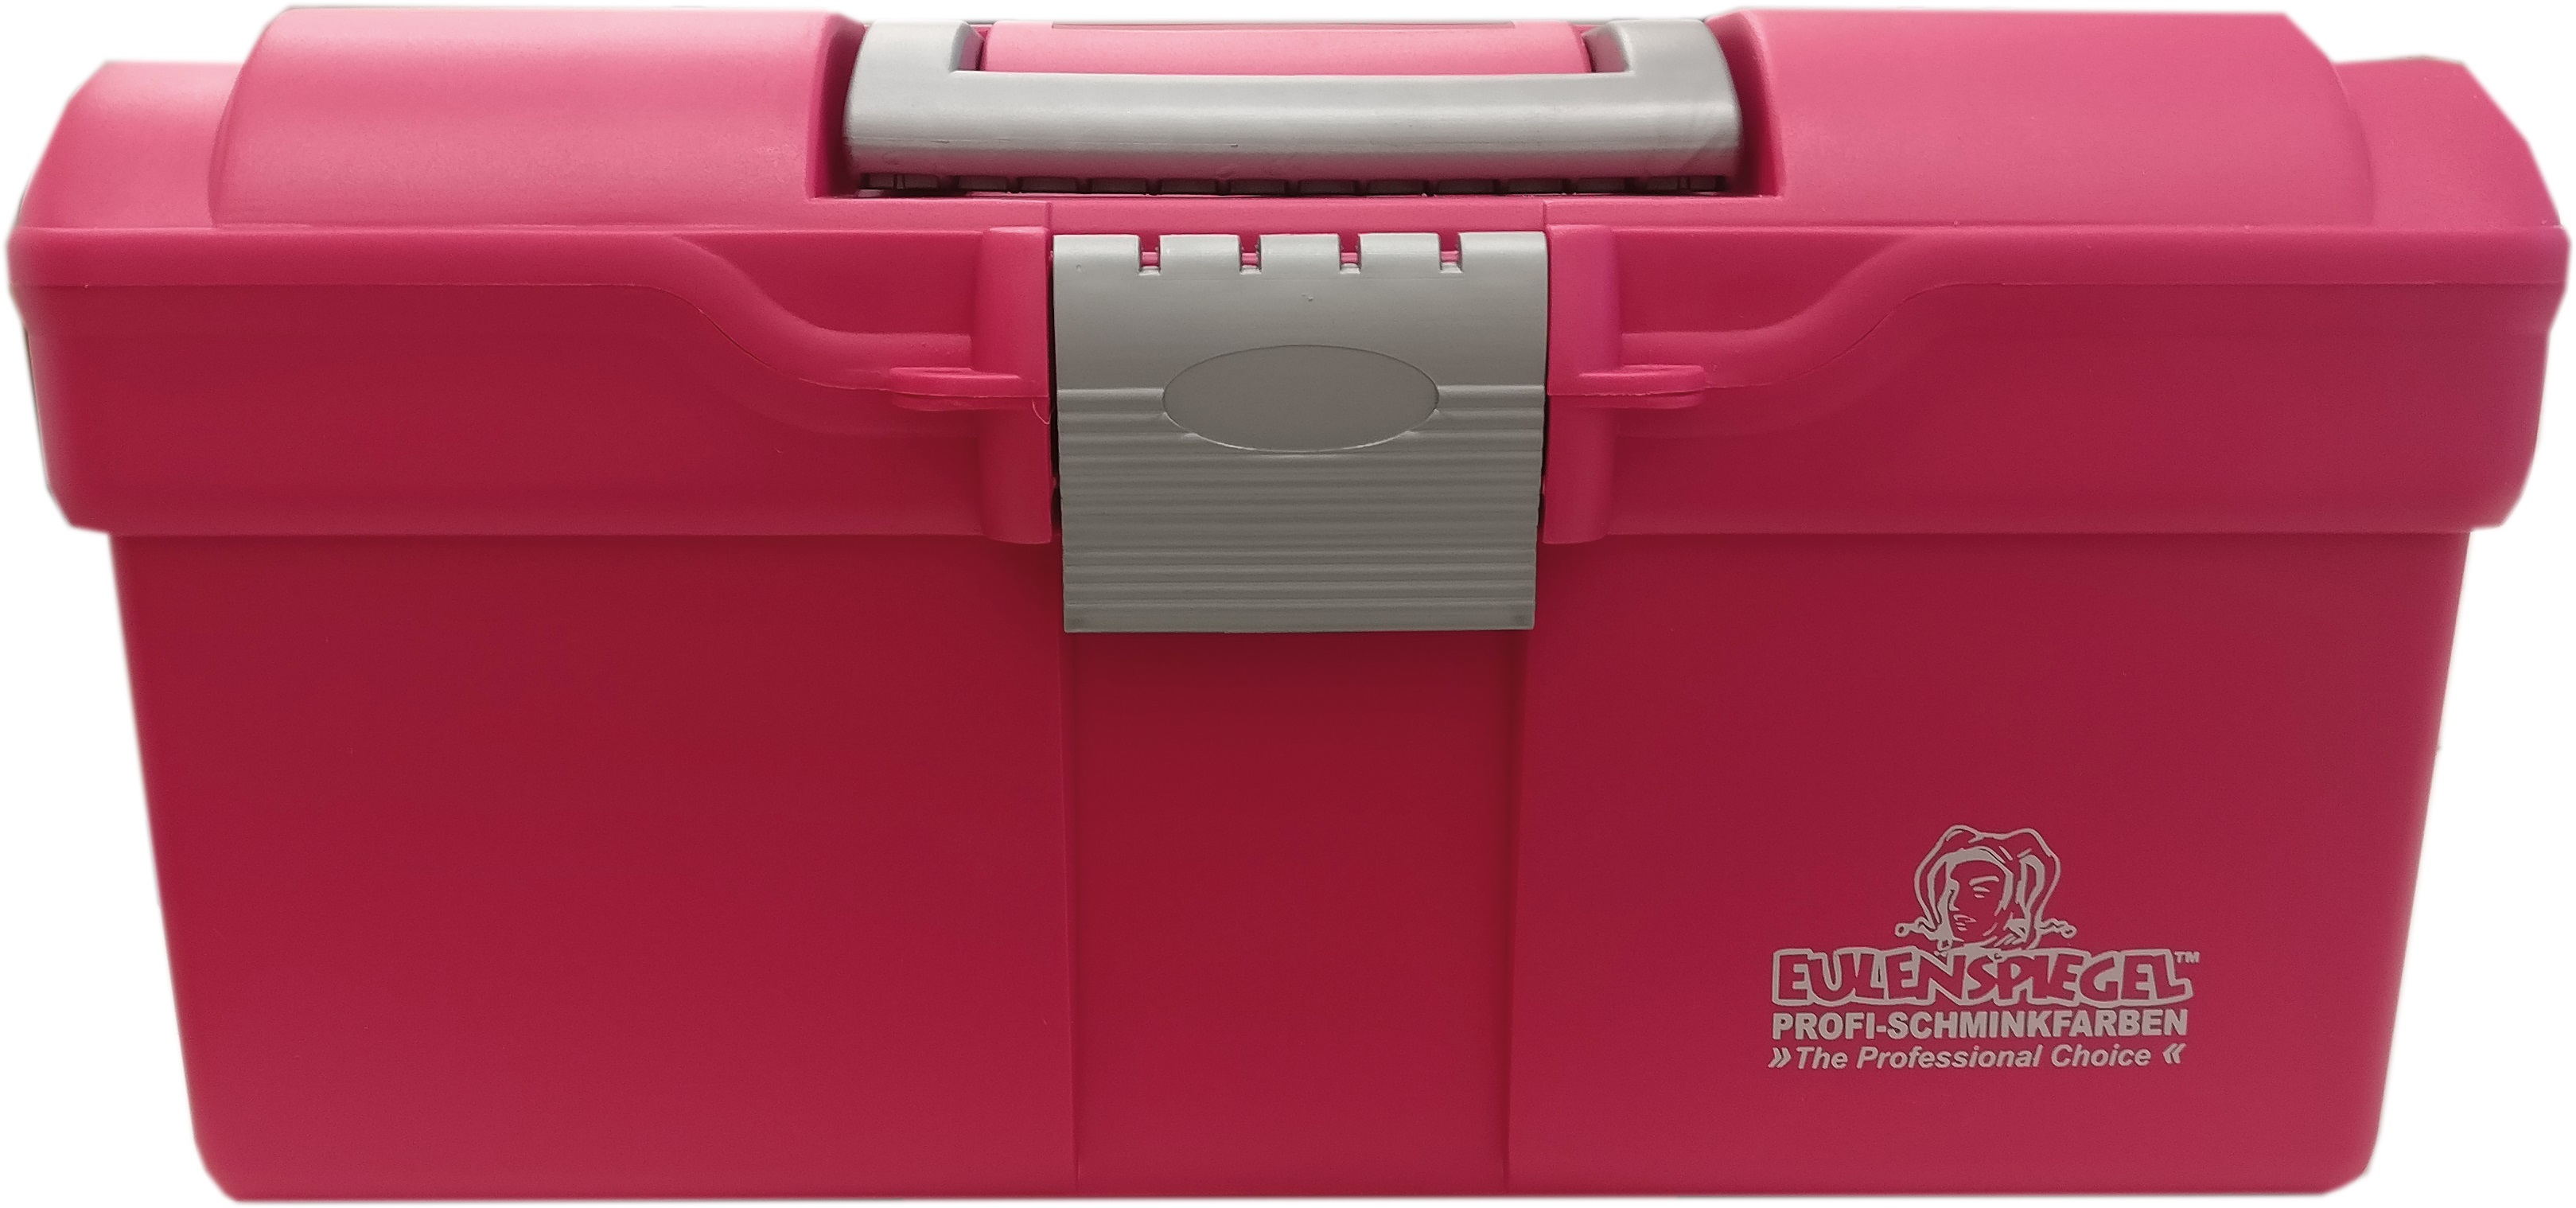 Profi Schmink-Koffer aus Kunststoff (klein) rosa-metallic